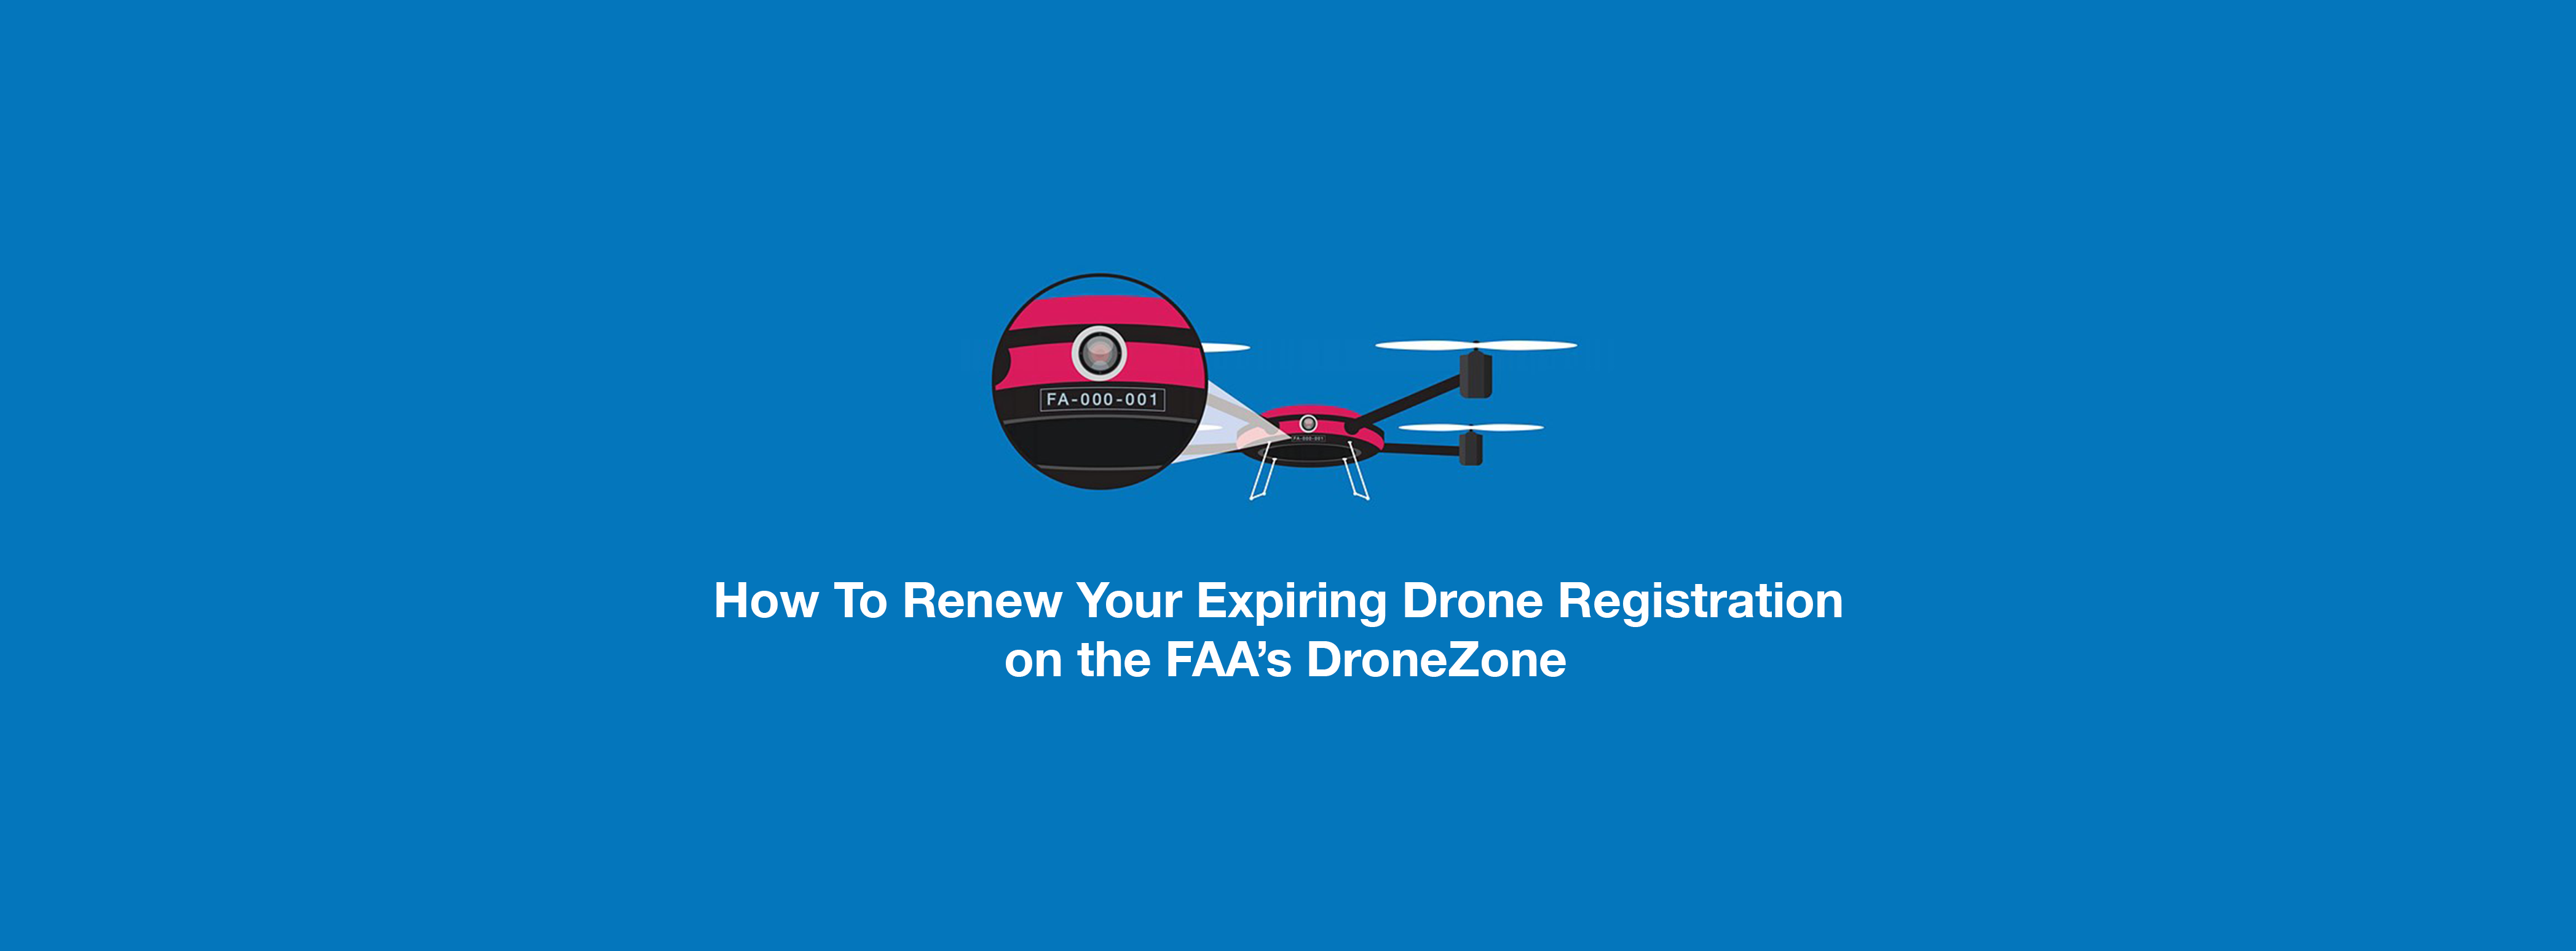 Three Tips on Renewing Expiring Drone Registration